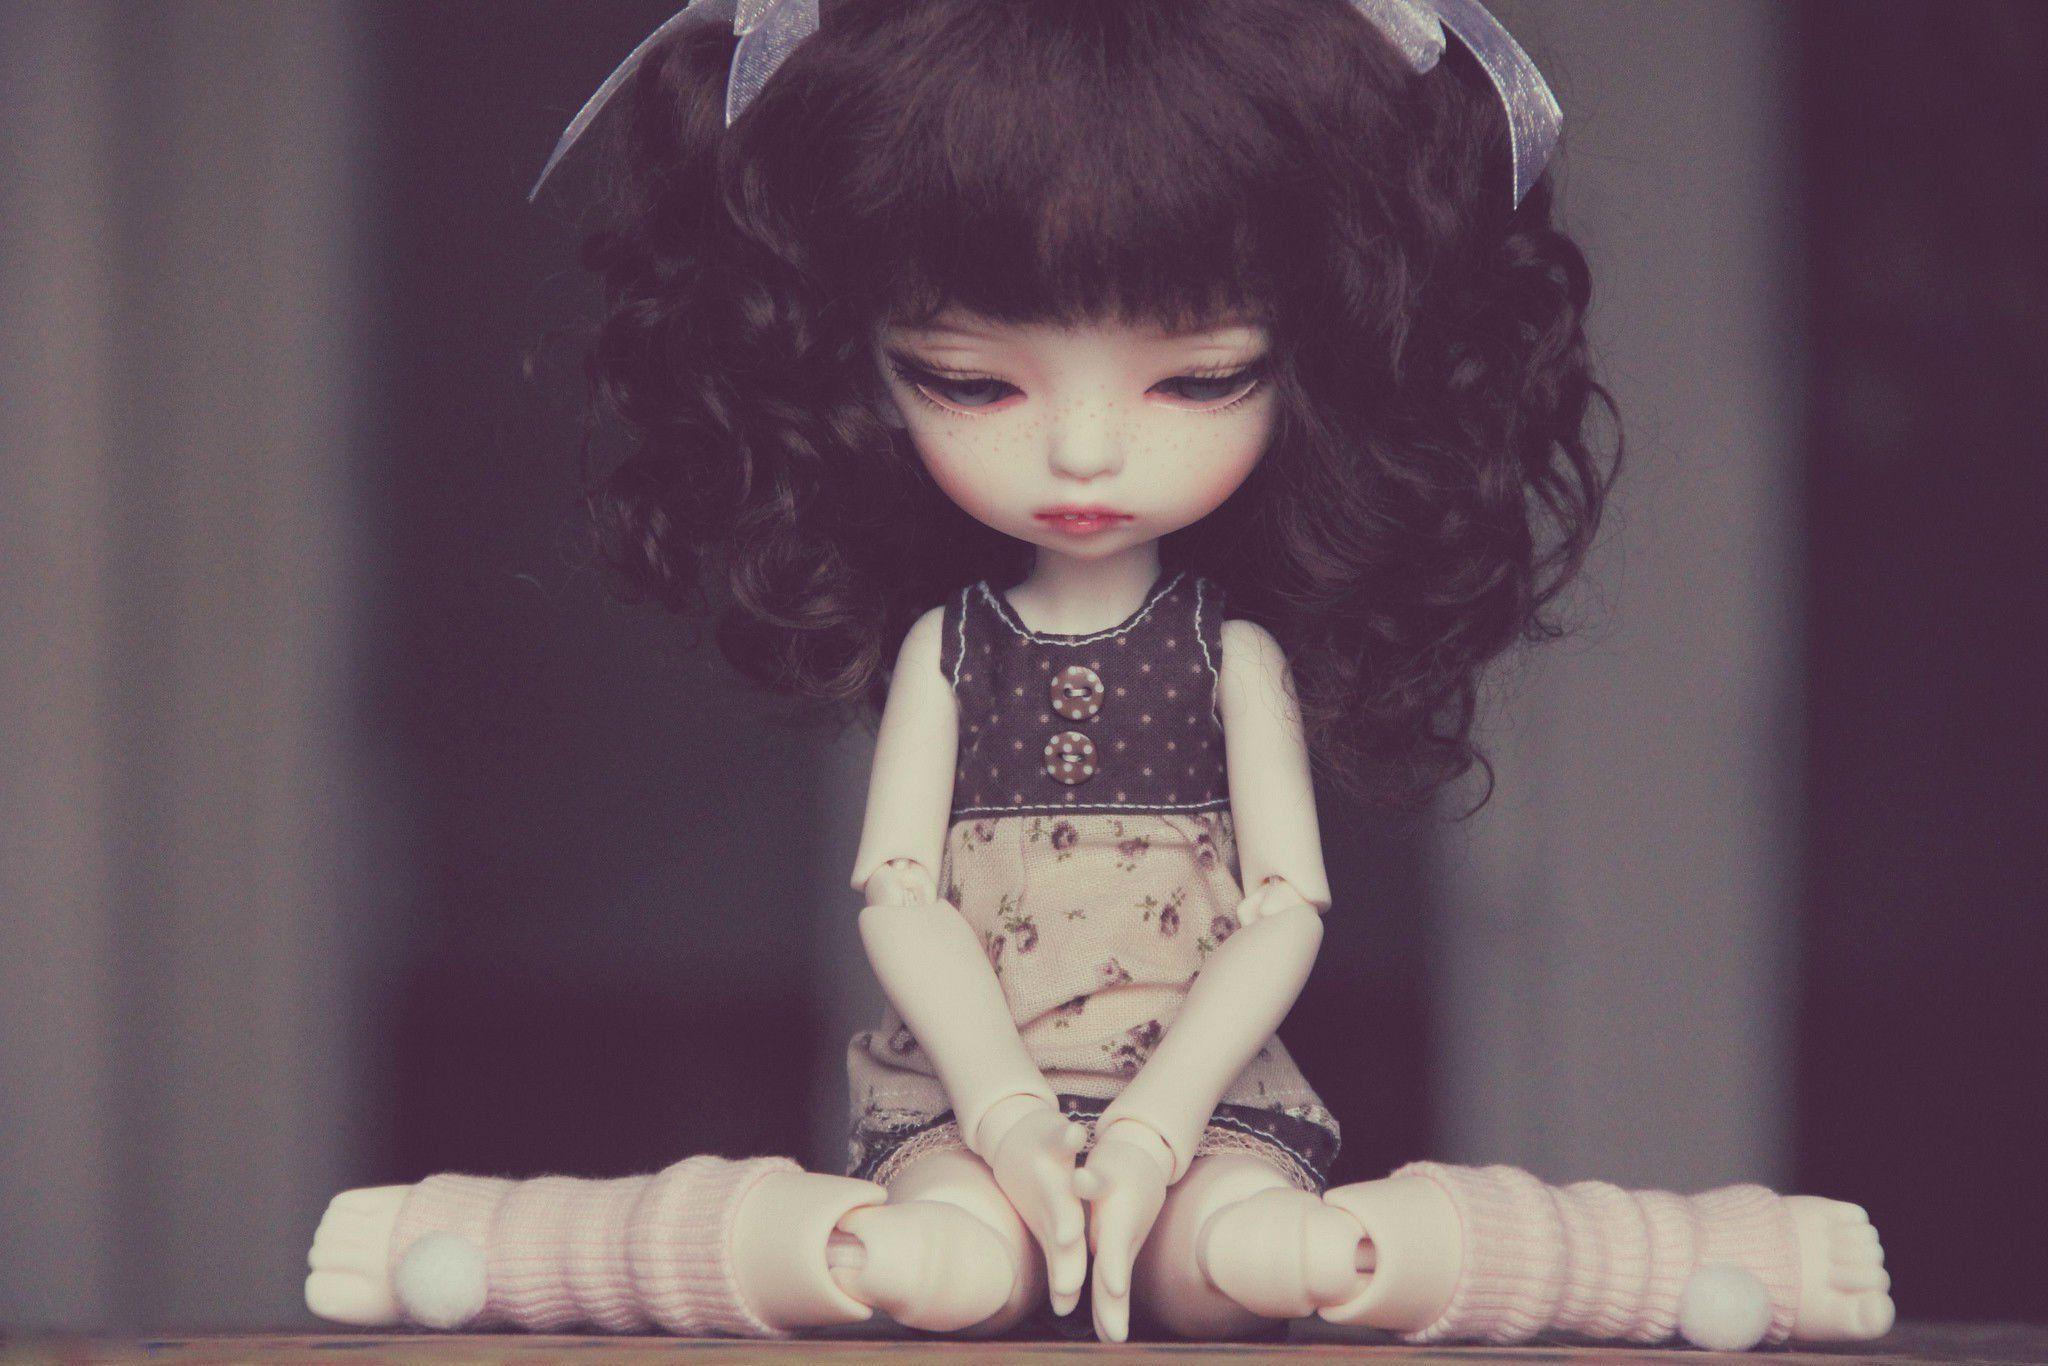 Depression sad mood sorrow dark people love doll toy wallpaper